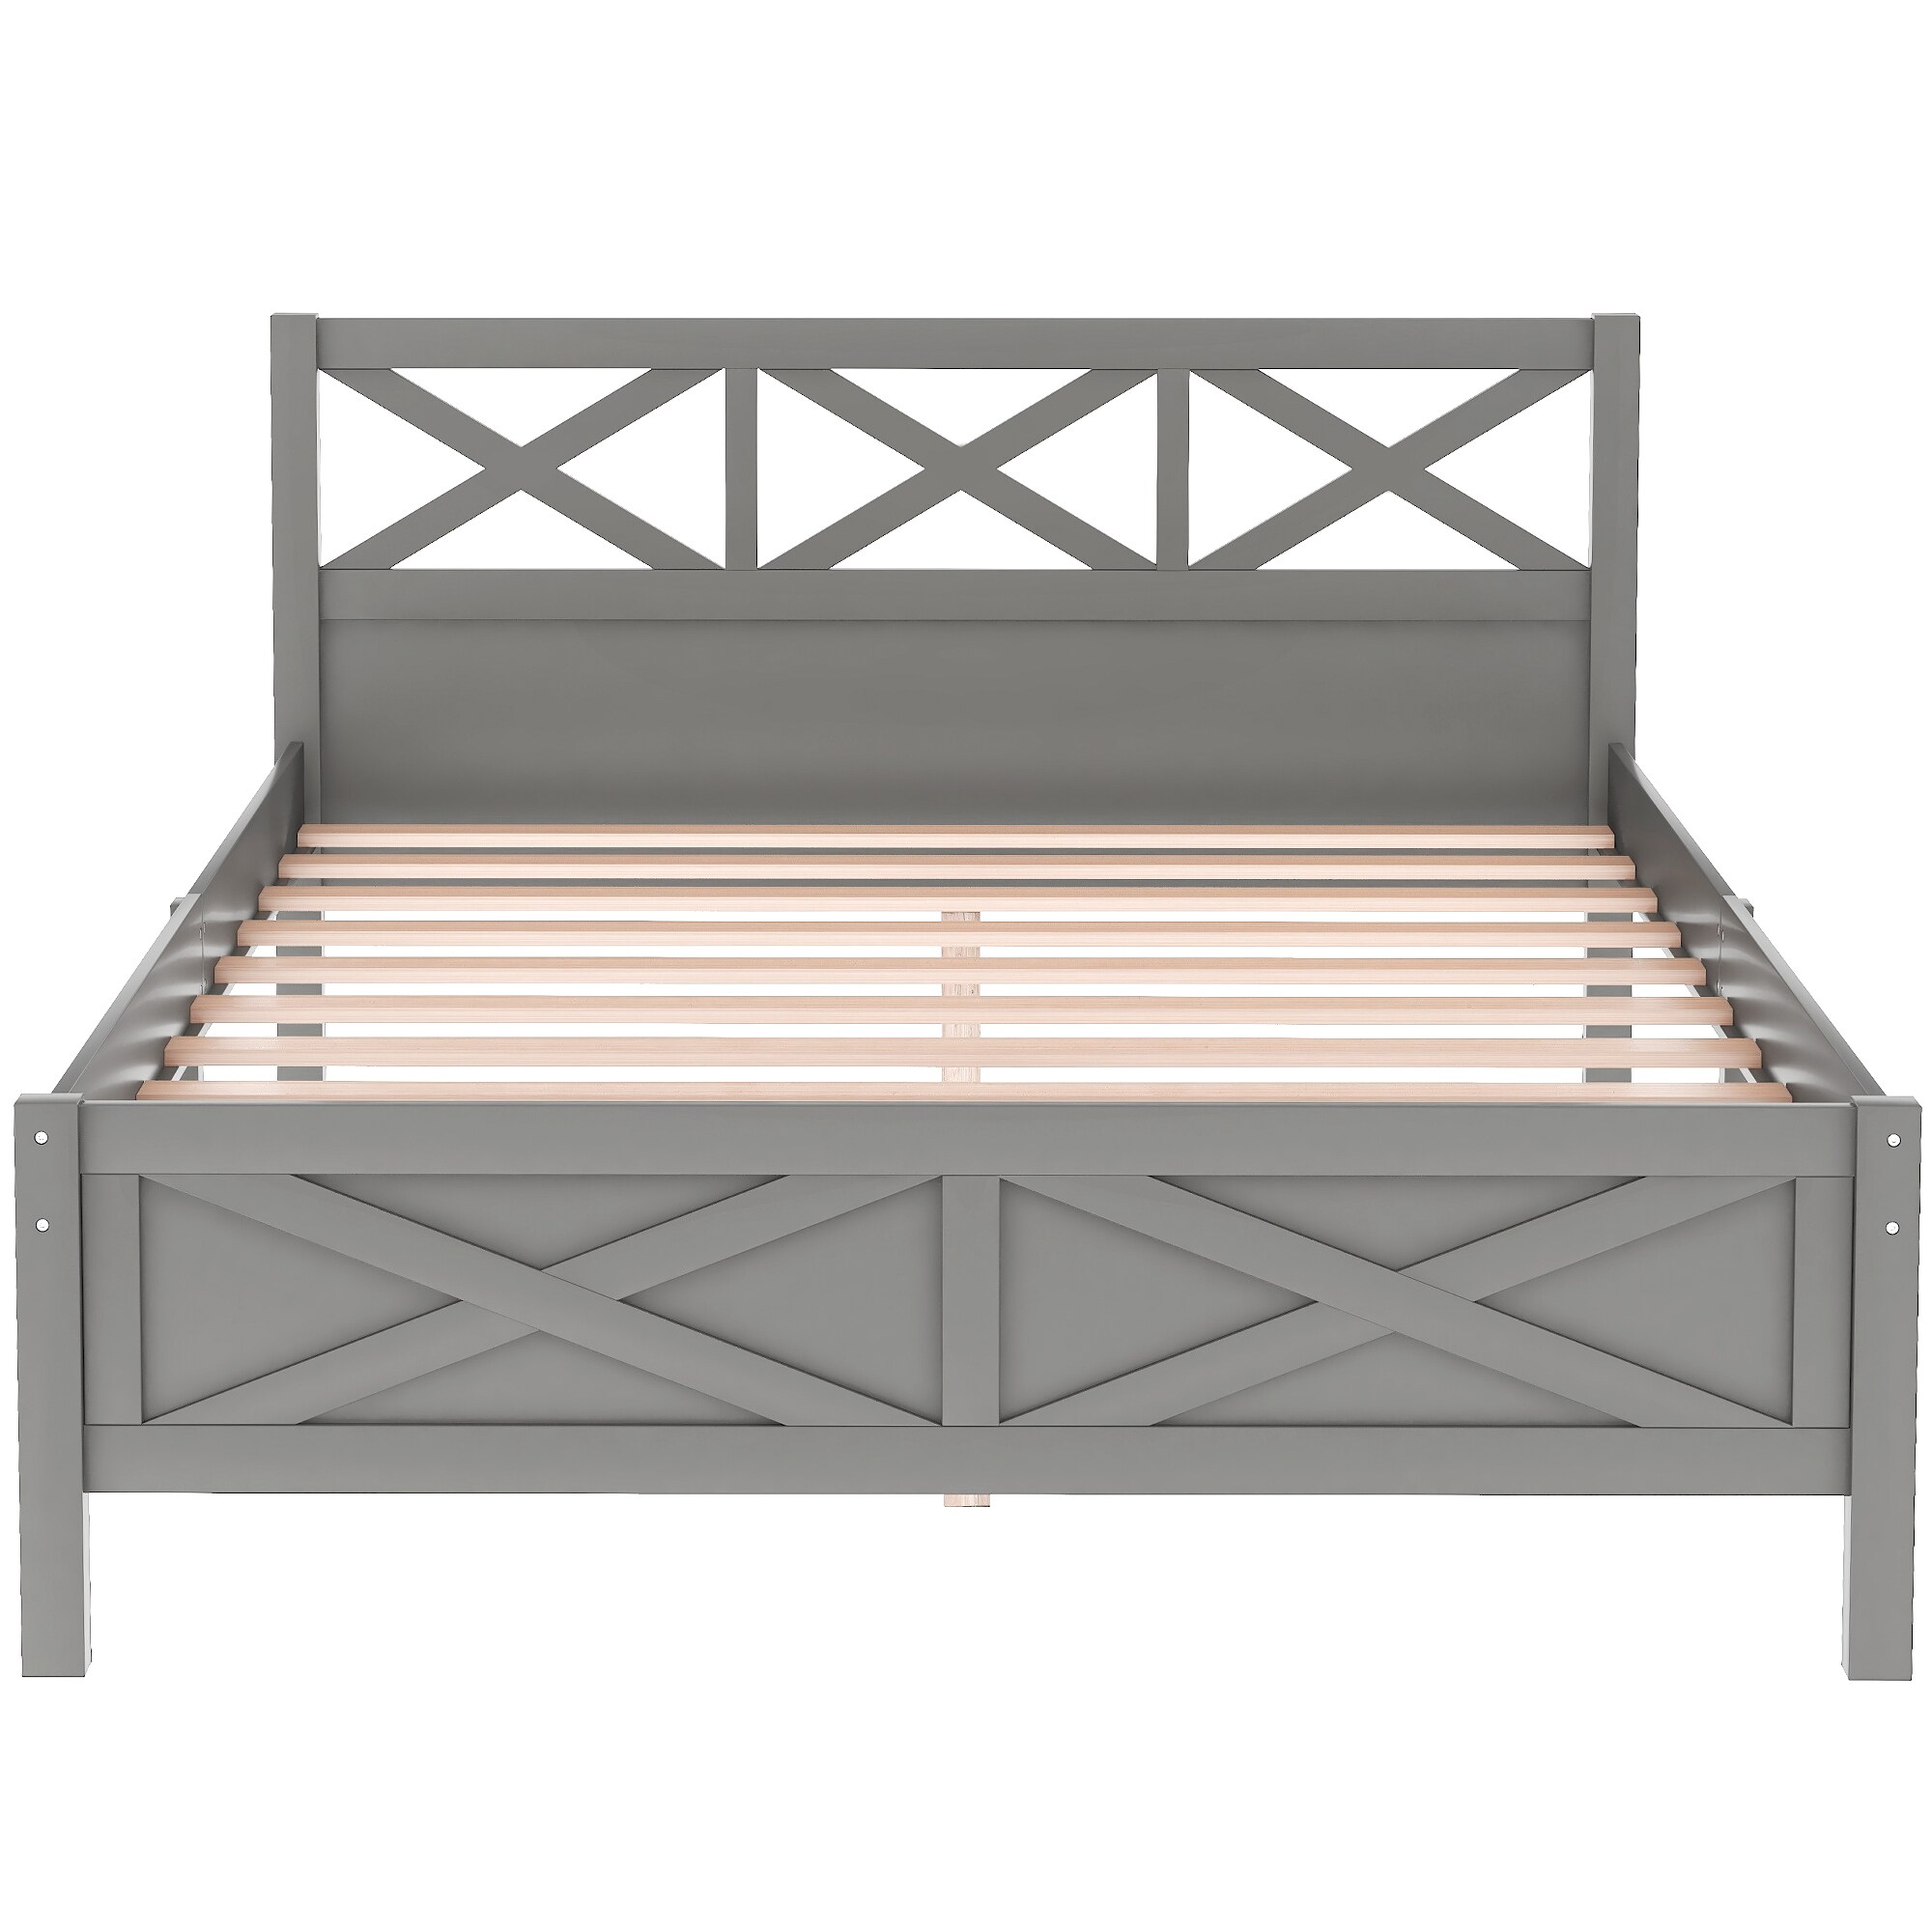 Details about   Twin/Full/Queen Wooden Bed Frame Mattress Platform Wood Slats Support Gray 